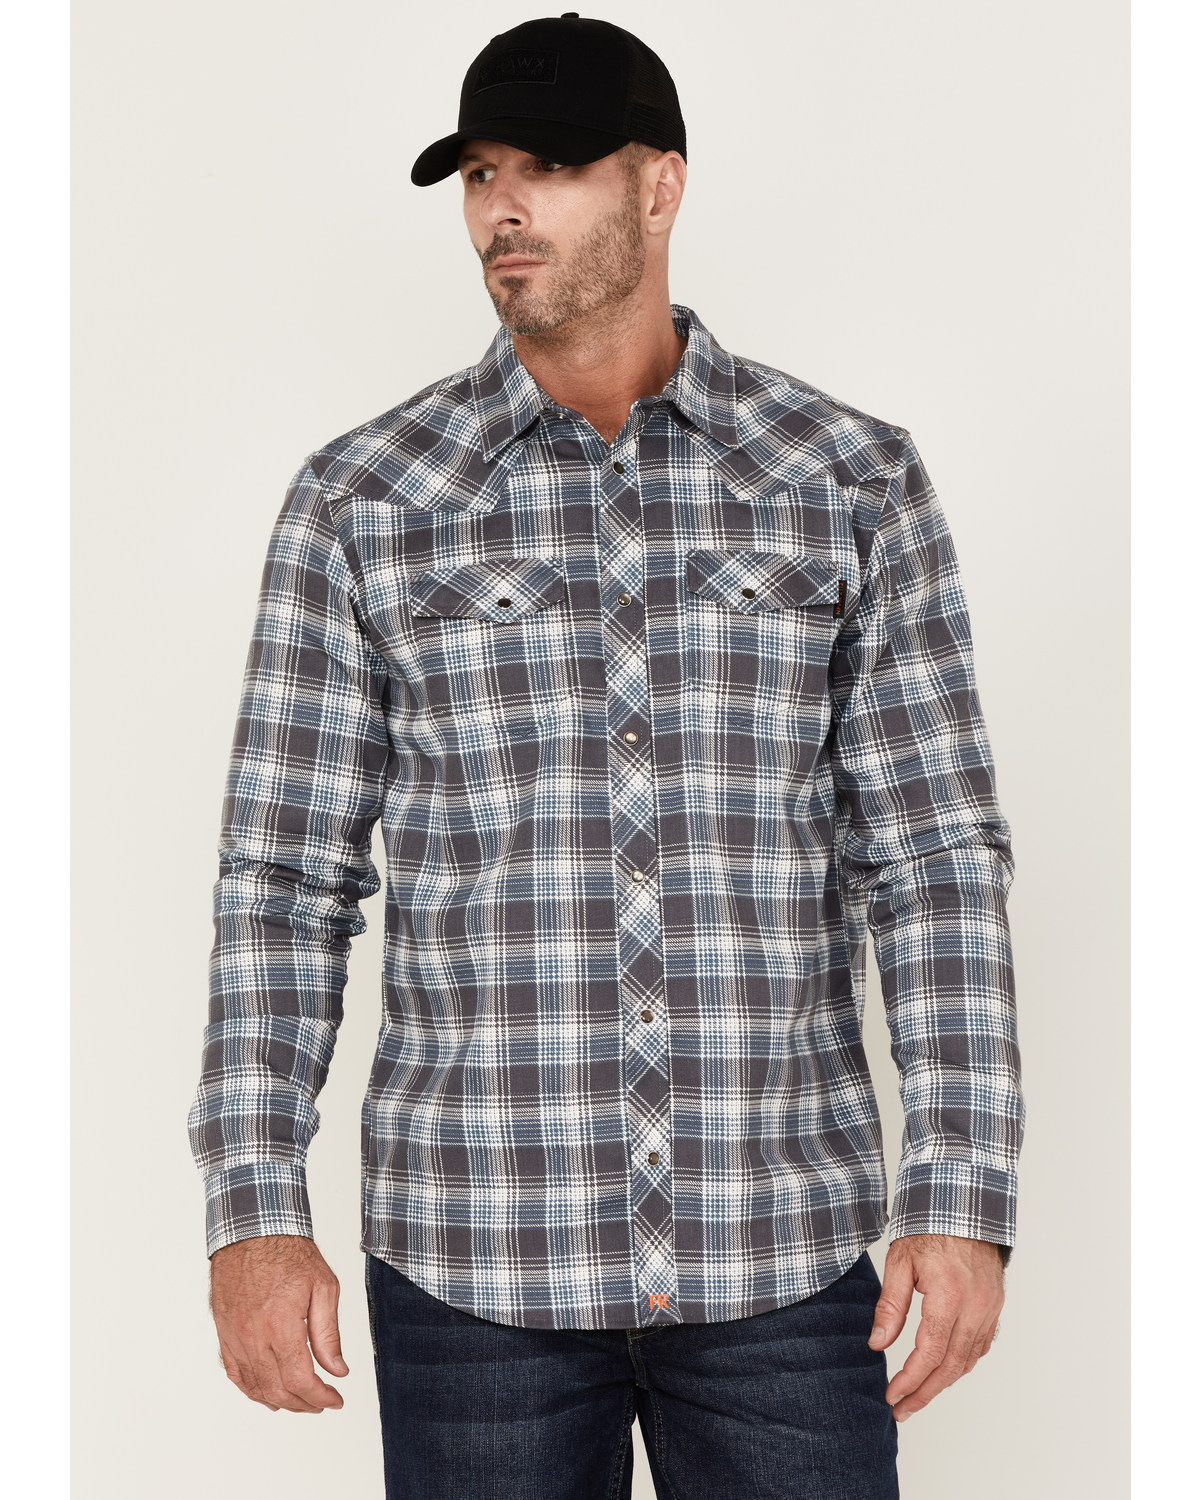 Cody James Men's FR Large Plaid Long Sleeve Snap Work Shirt